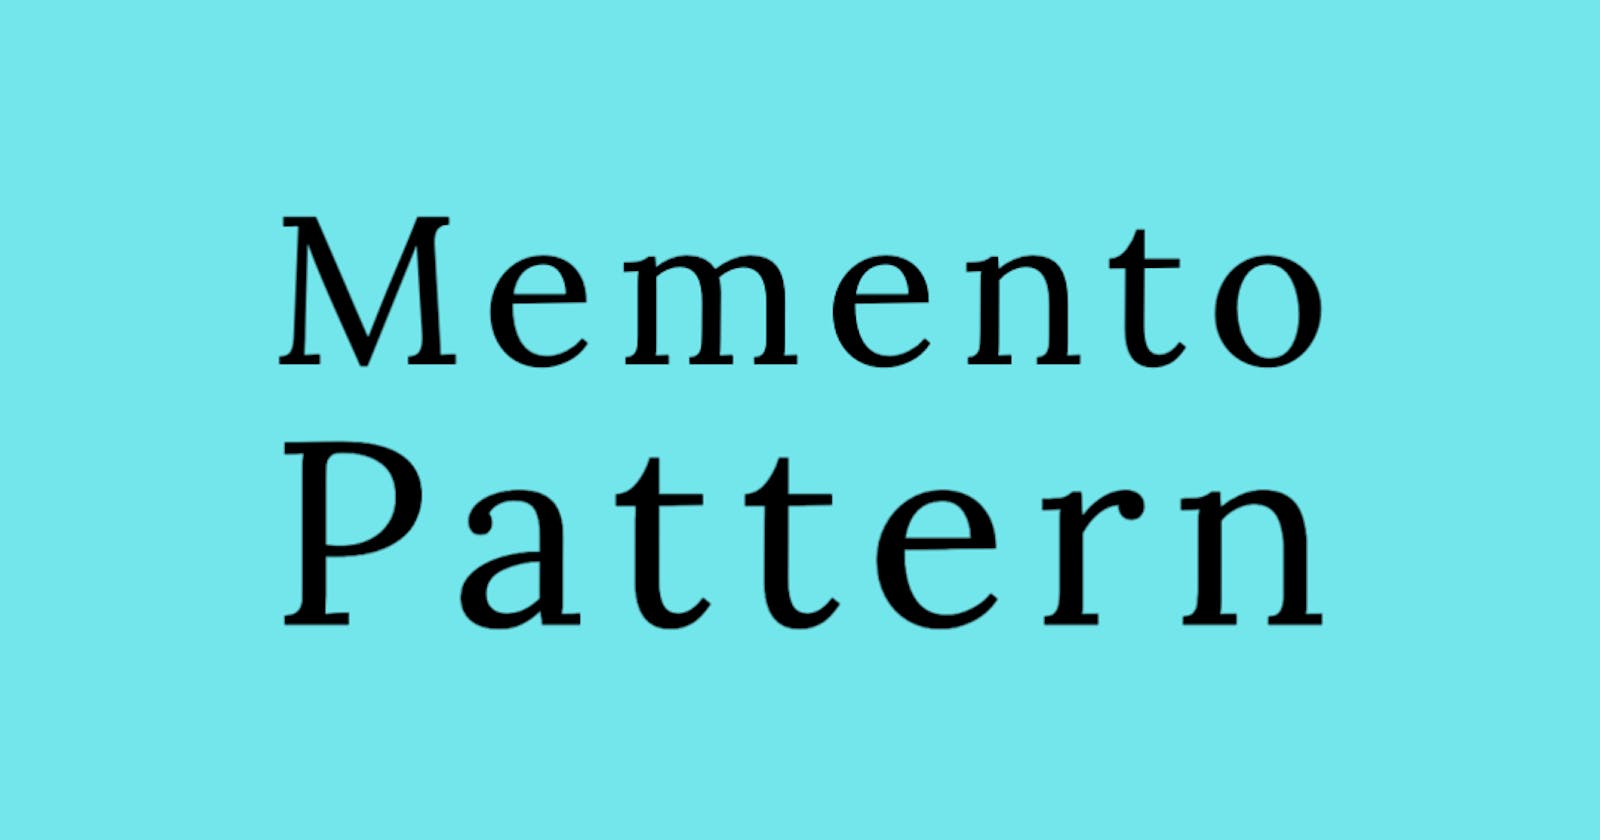 Notes: Go Design Patterns - Memento Pattern